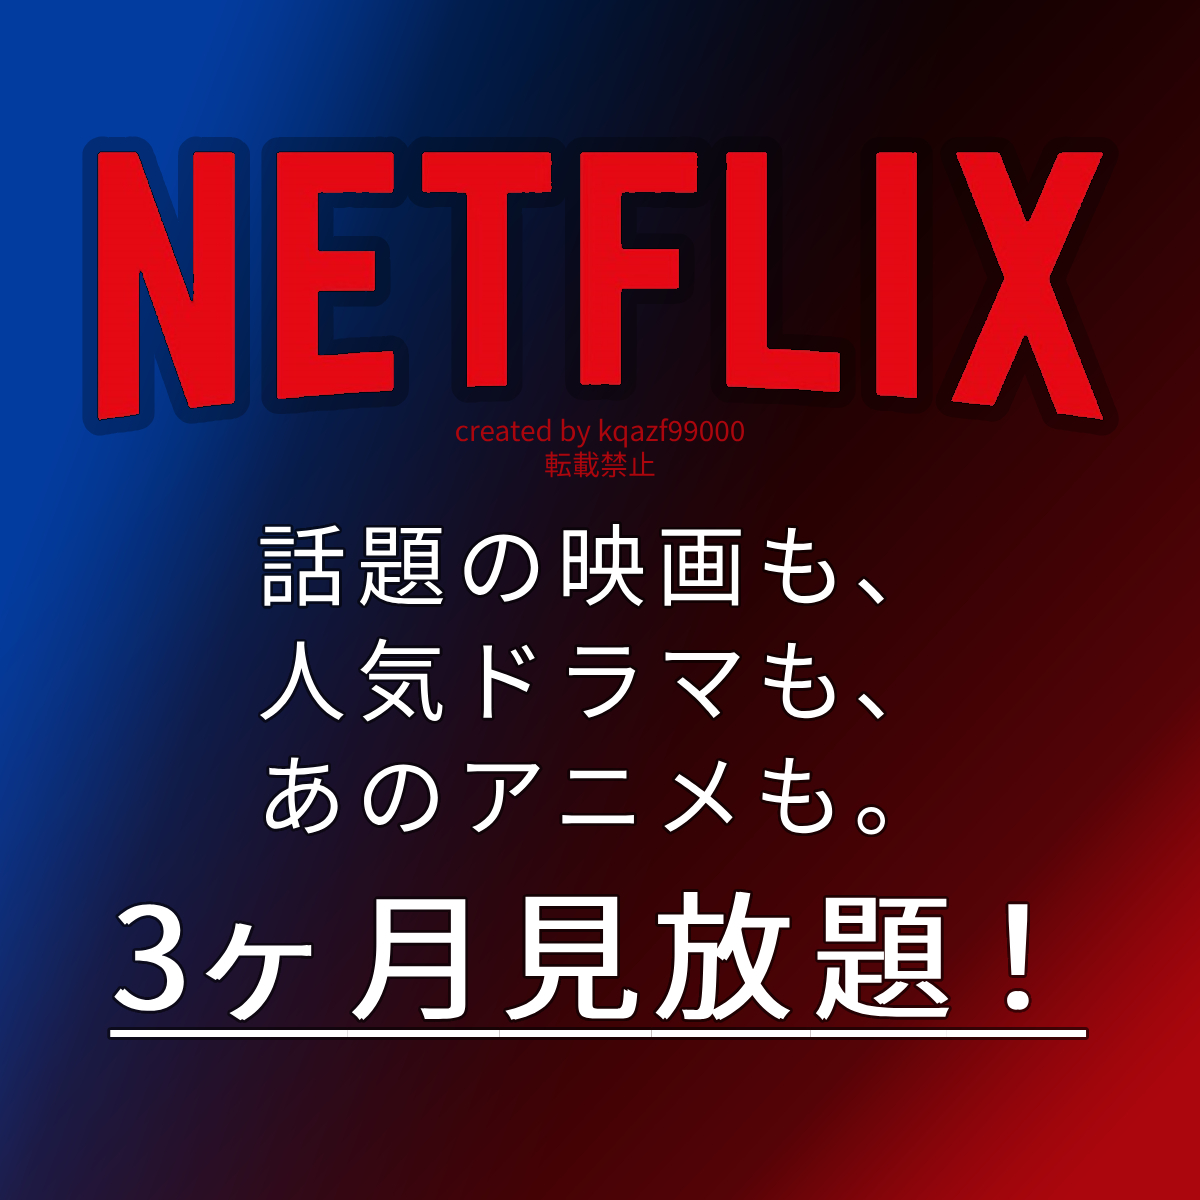 Netflix Premium 3ヶ月 スマートテレビ Fire stick tv Android IOS 4K UHD 対応 アニメ 映画 ドラマ キッズ ファミリー向け 韓流 作品有 _画像1